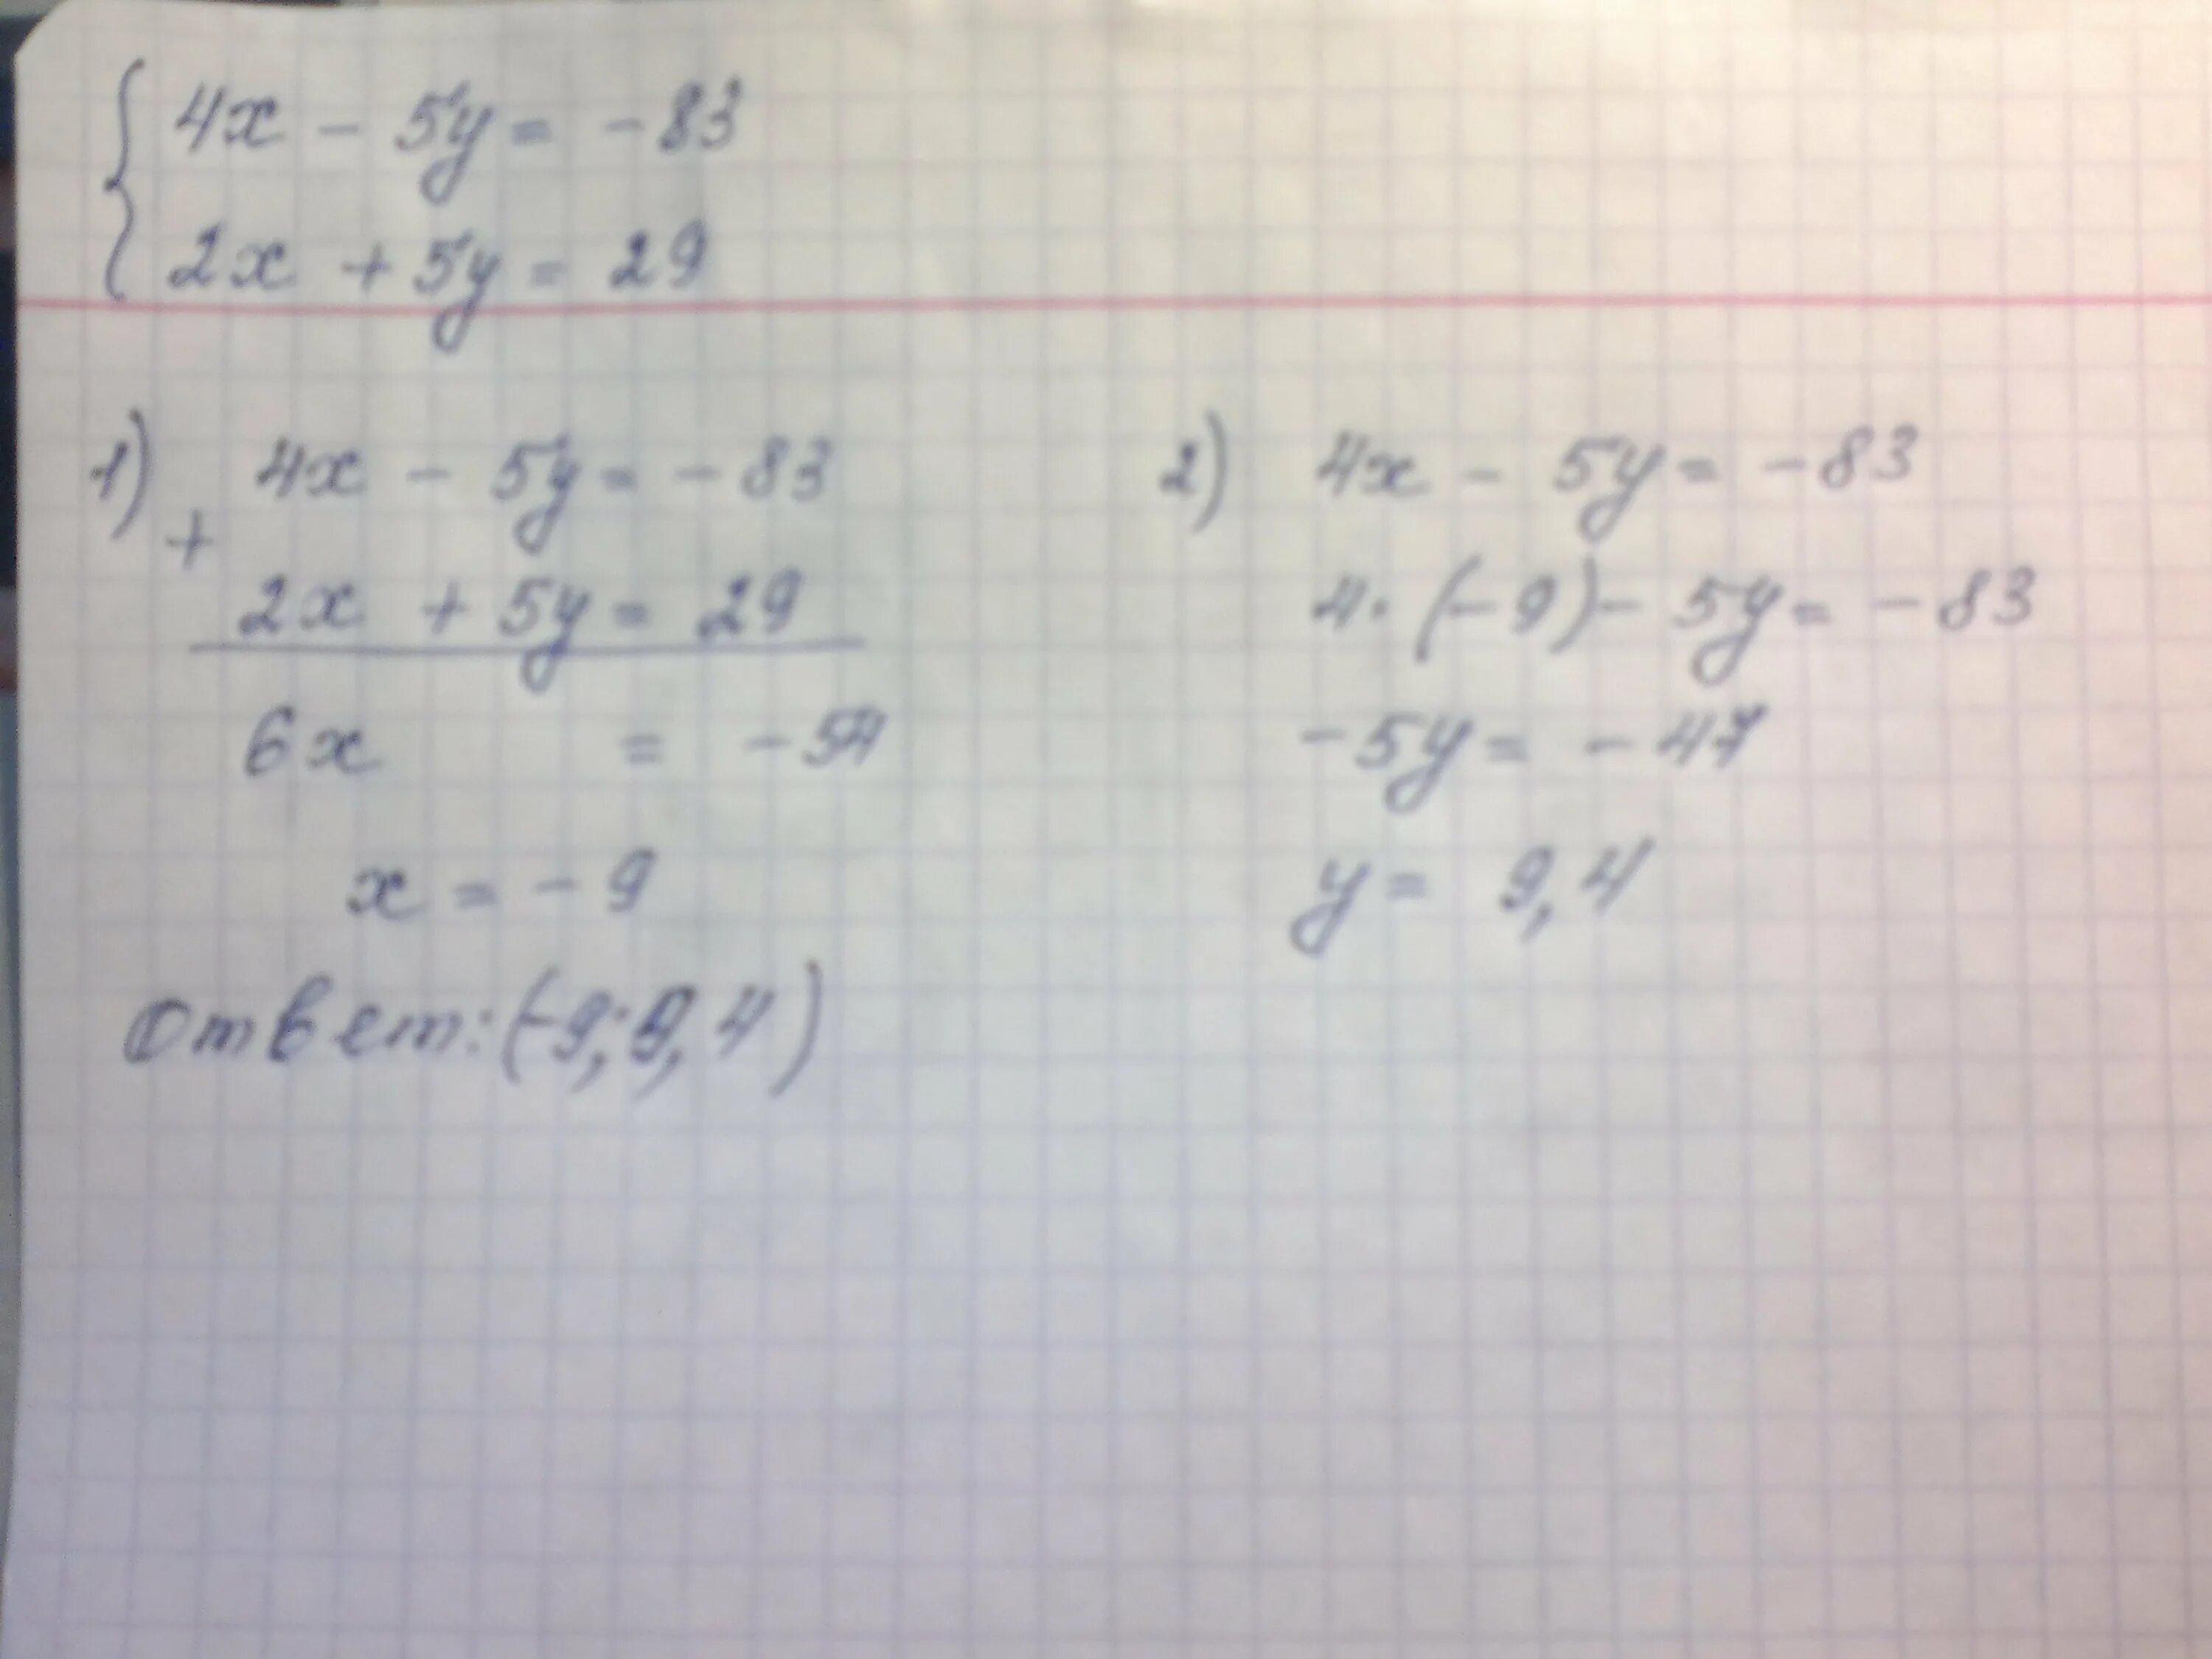 Решите методом сложения систему уравнений 4x-5y -83. Решите методом сложения систему уравнений 4x-5y -83 2x+5y 29. Решите методом сложения систему уравнения 4 x.